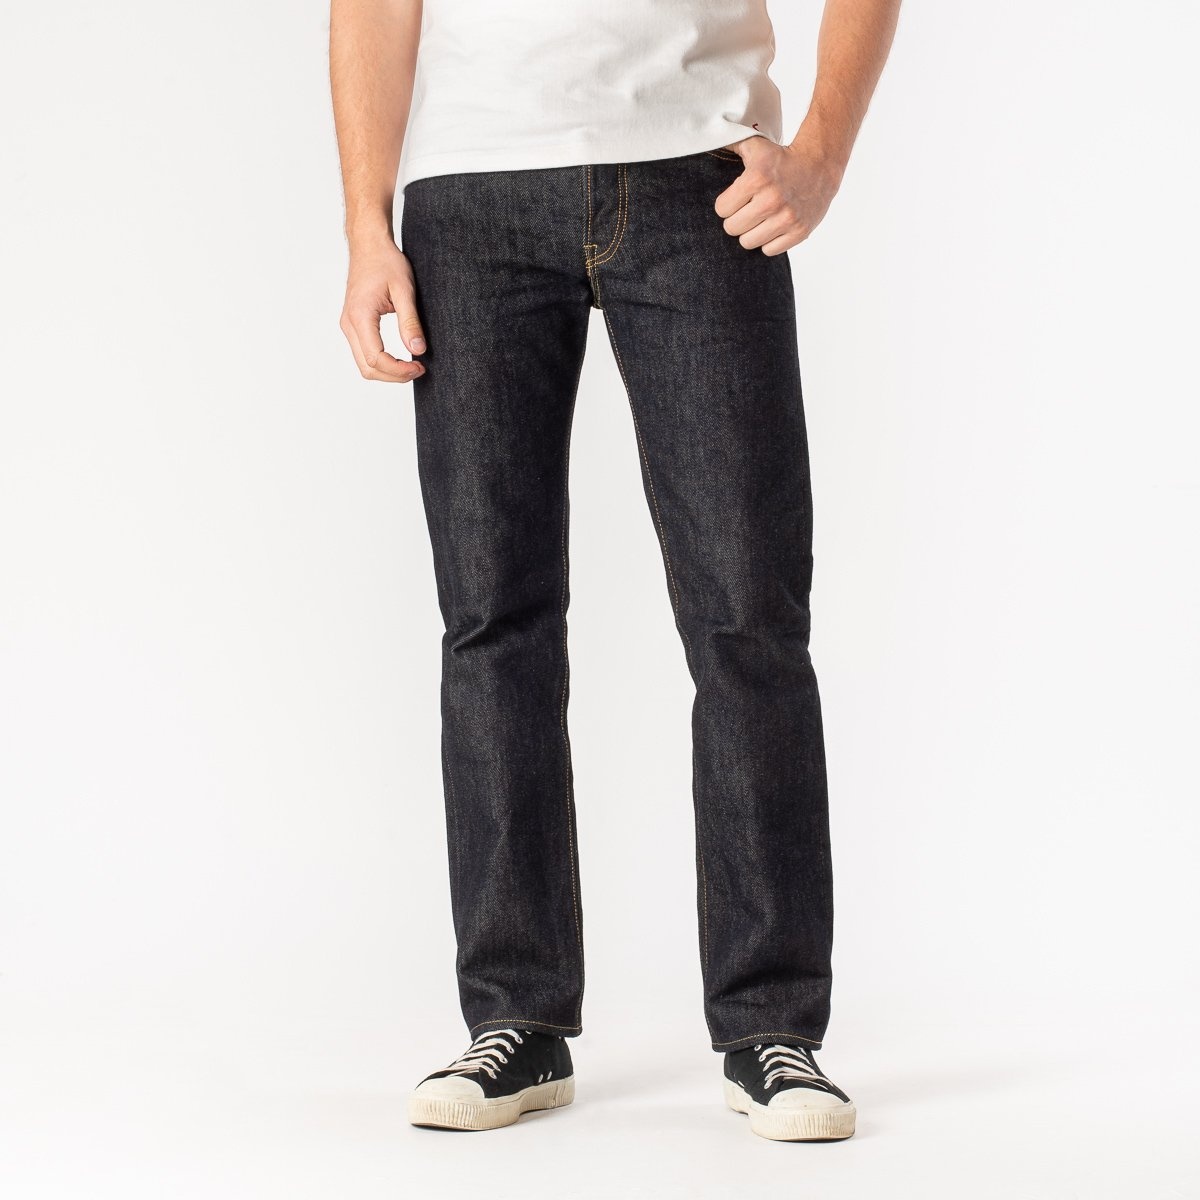 IH-666S-21 21oz Selvedge Denim Slim Straight Cut Jeans - Indigo - 2